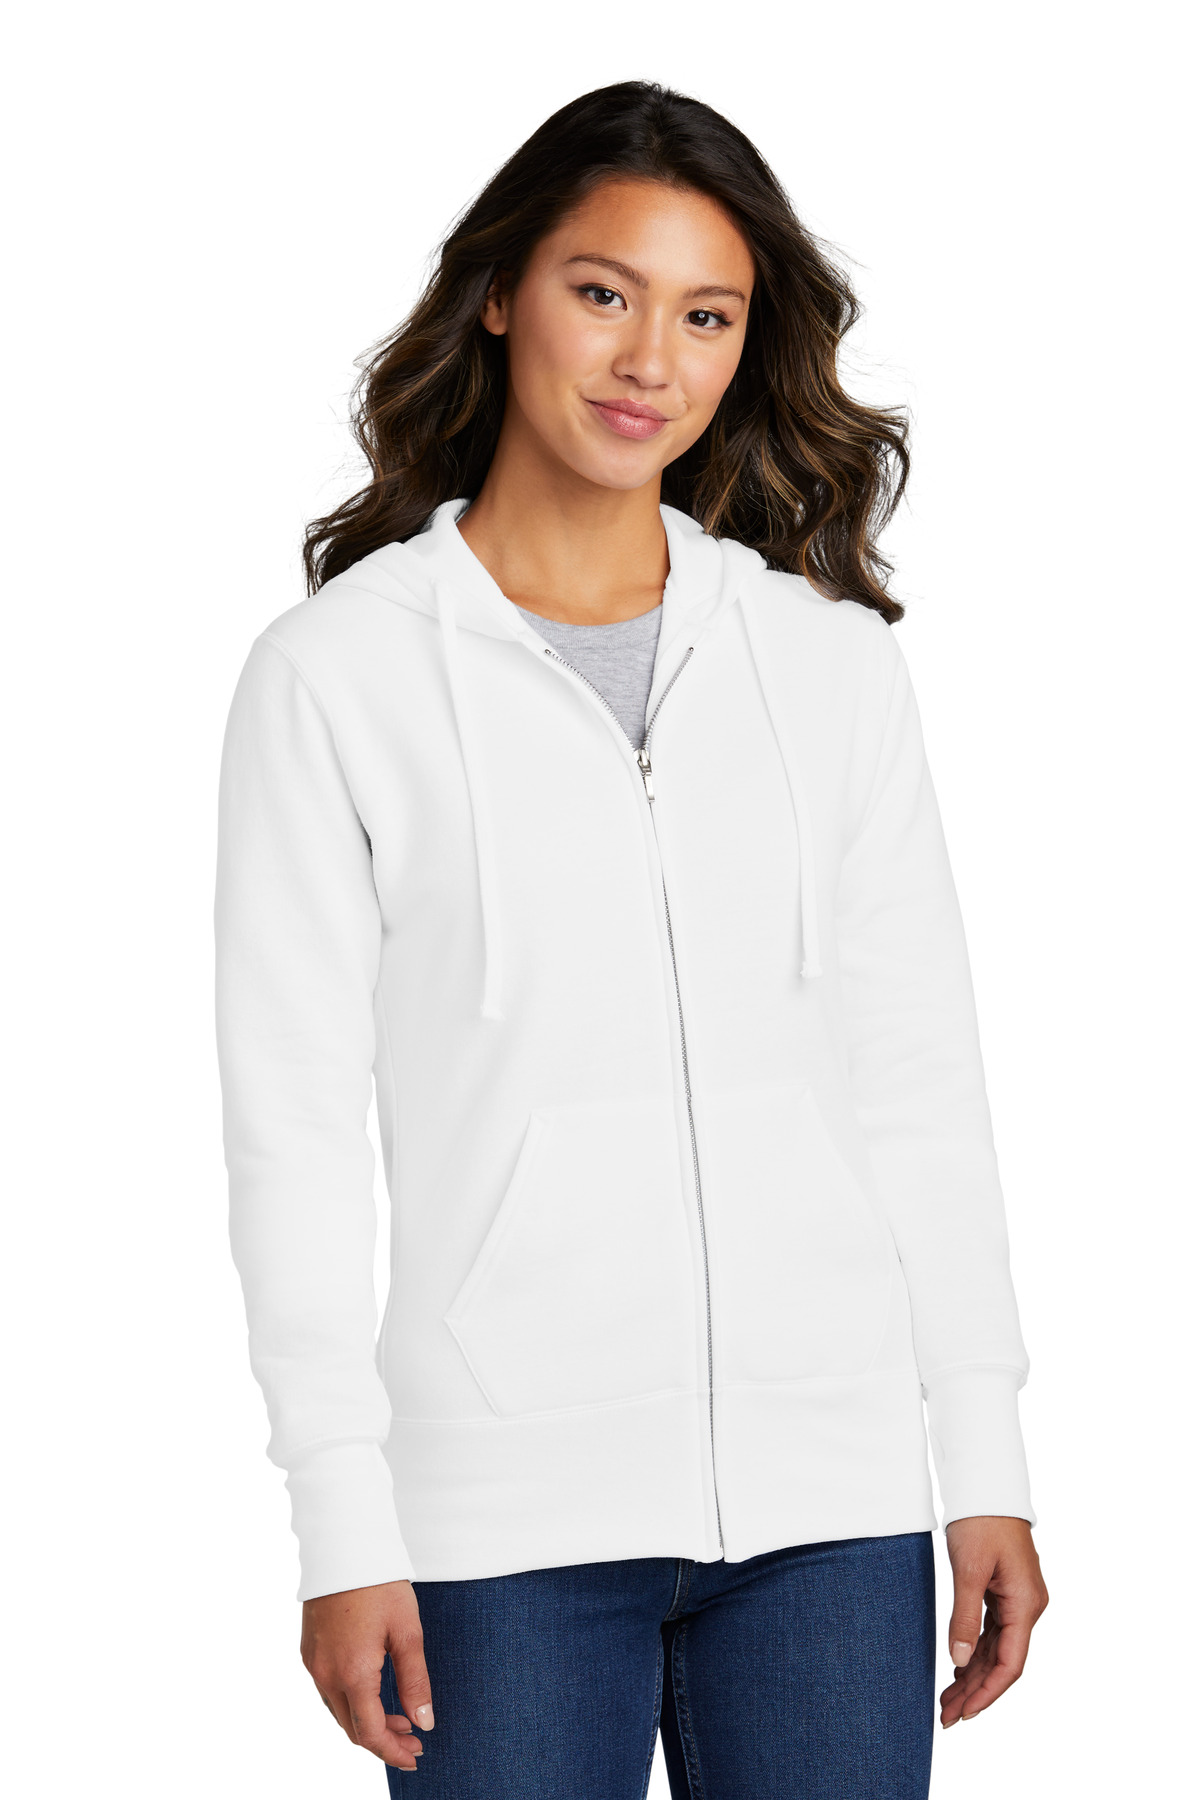 Port &#38; Company Ladies Core Fleece Full&#45;Zip Hooded Sweatshirt-Port & Company